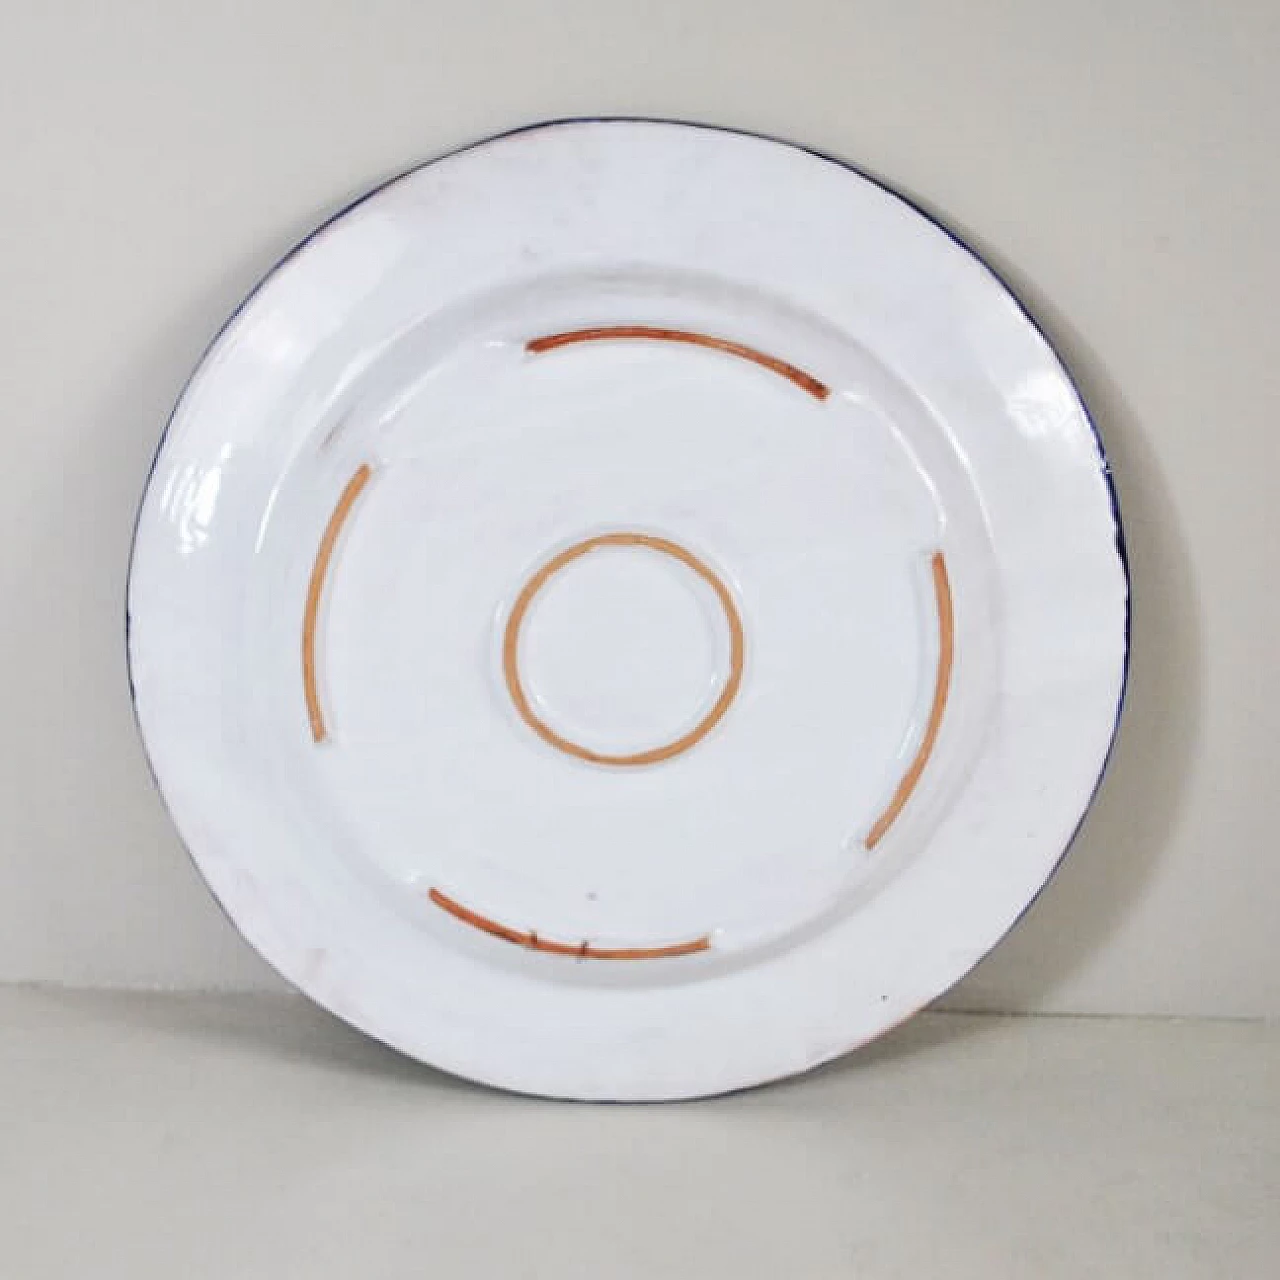 Decorative ceramic plate by Tarshito, 2000 1219716